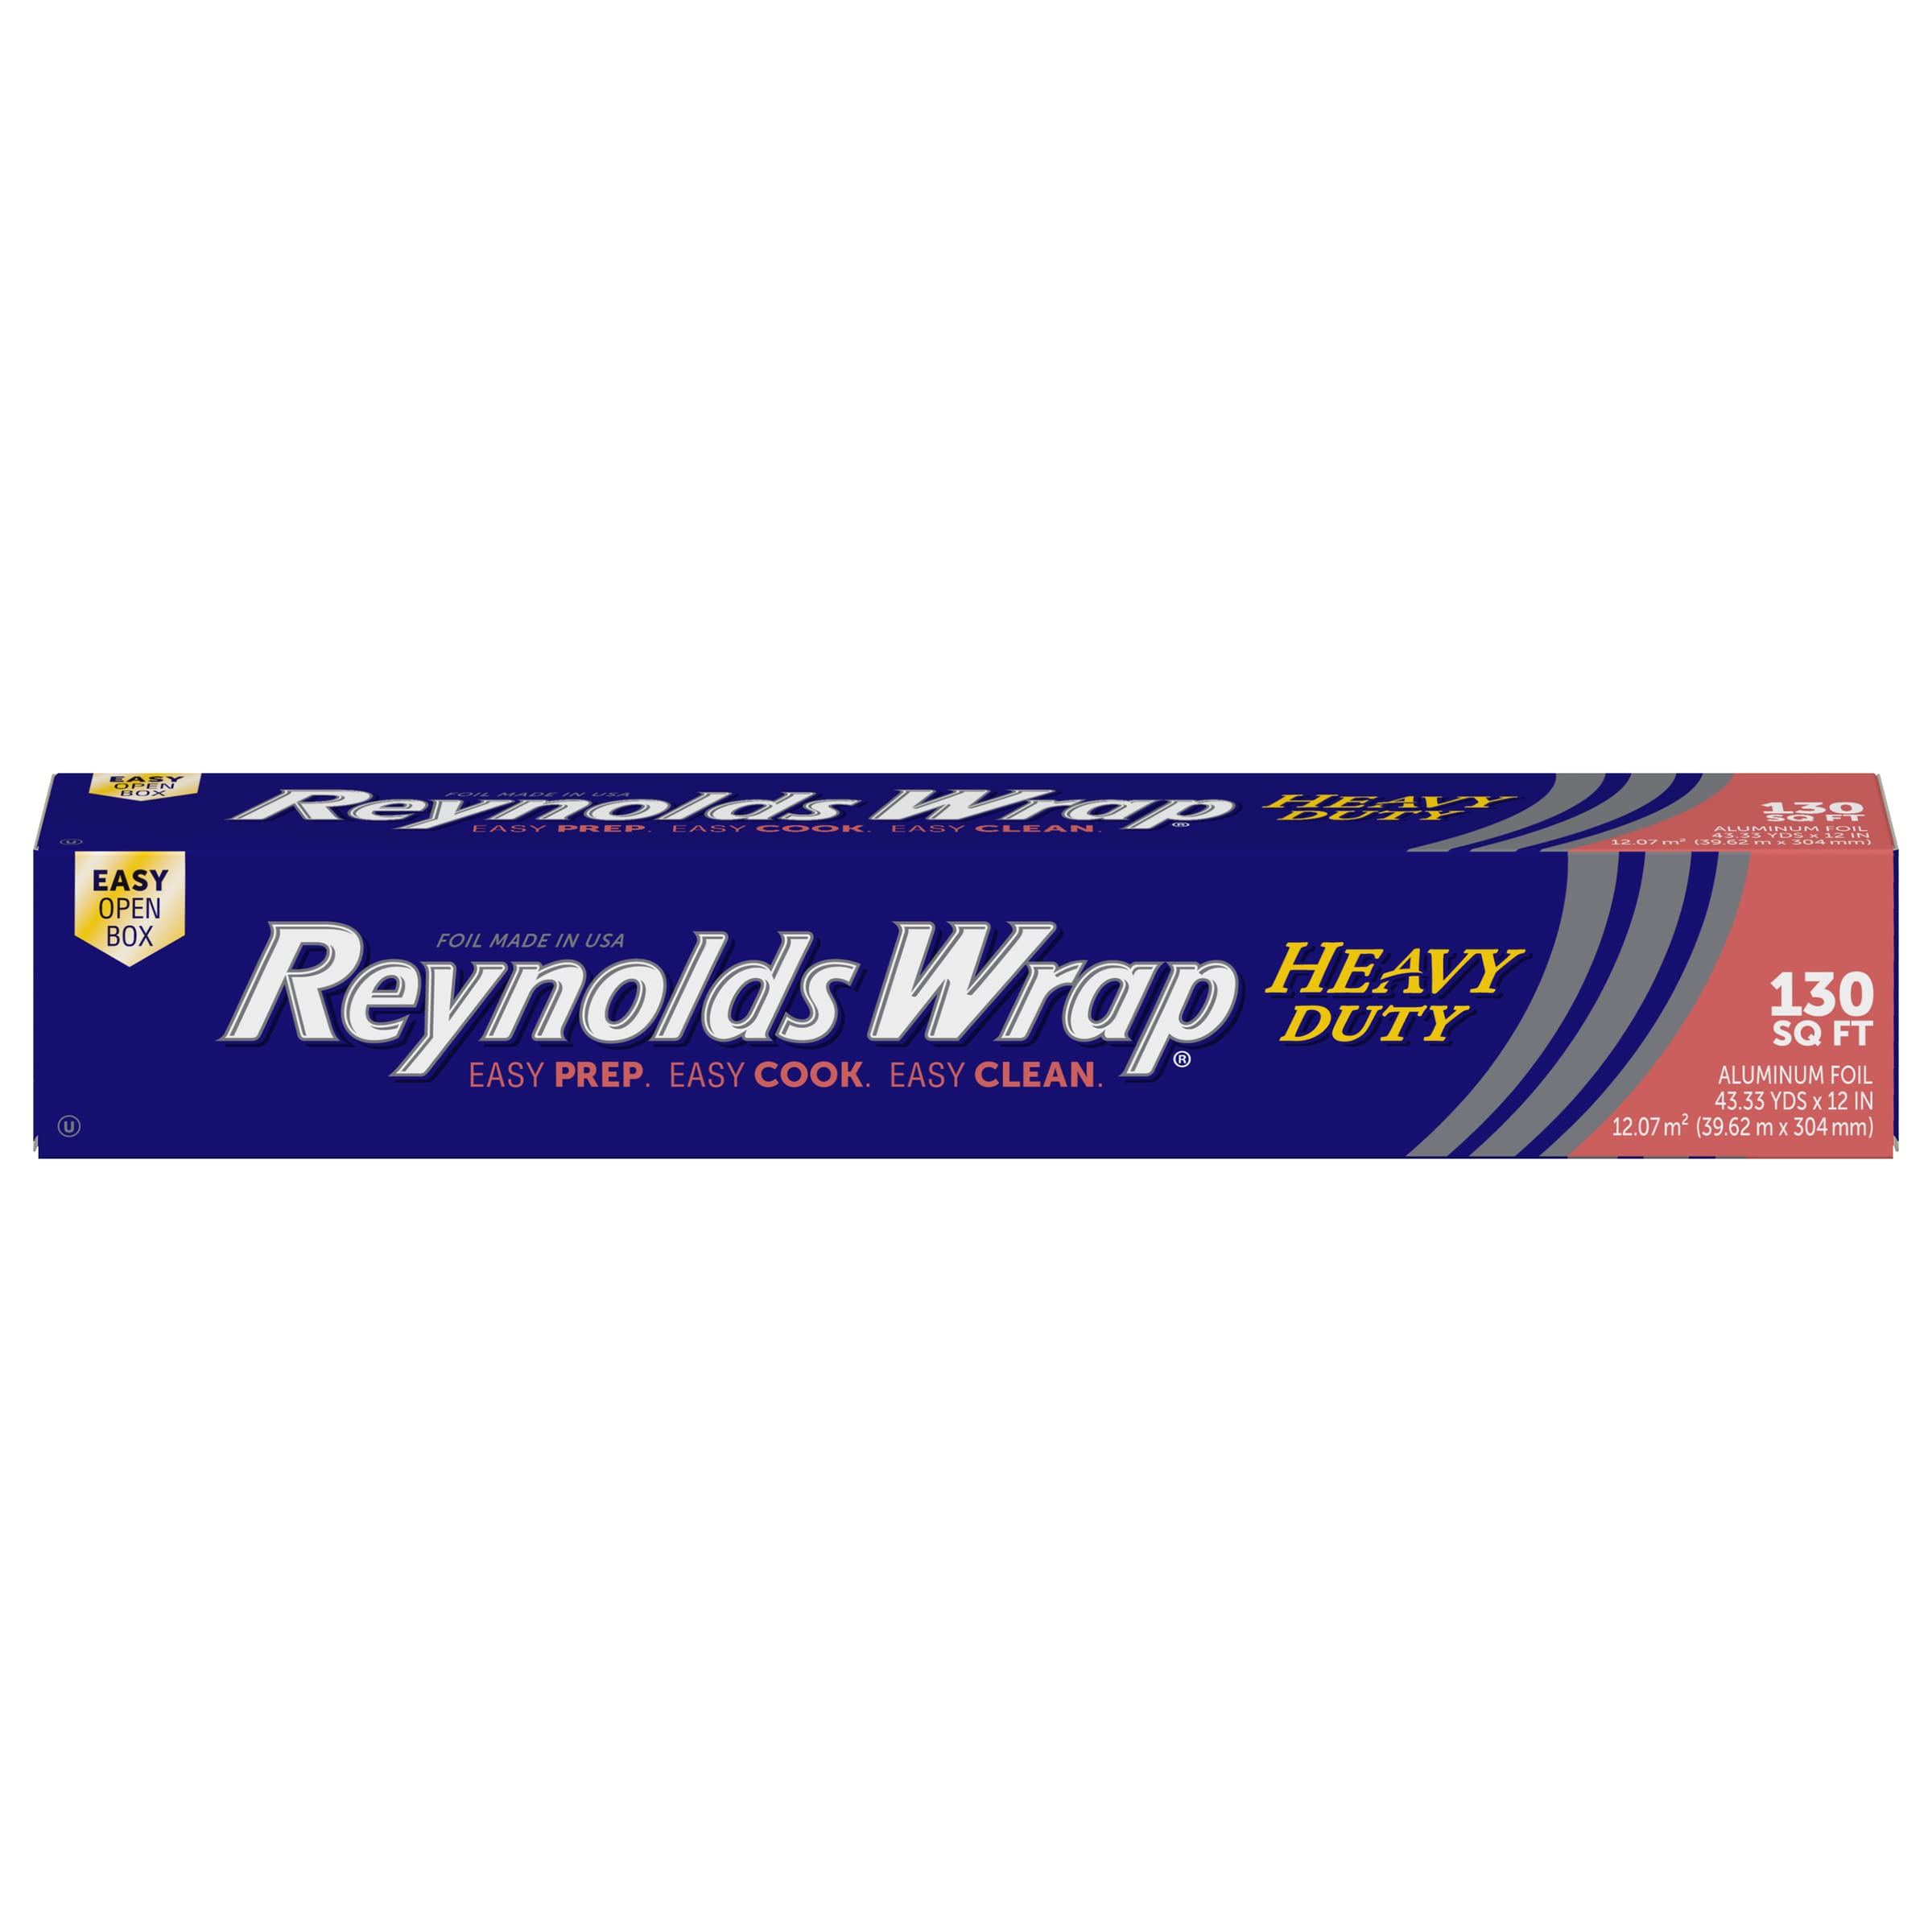 130 Sq. Ft Reynolds Wrap Aluminum Foil (Heavy Duty) $7.69 w/ S&S + Free S&H w/ Prime or $25+